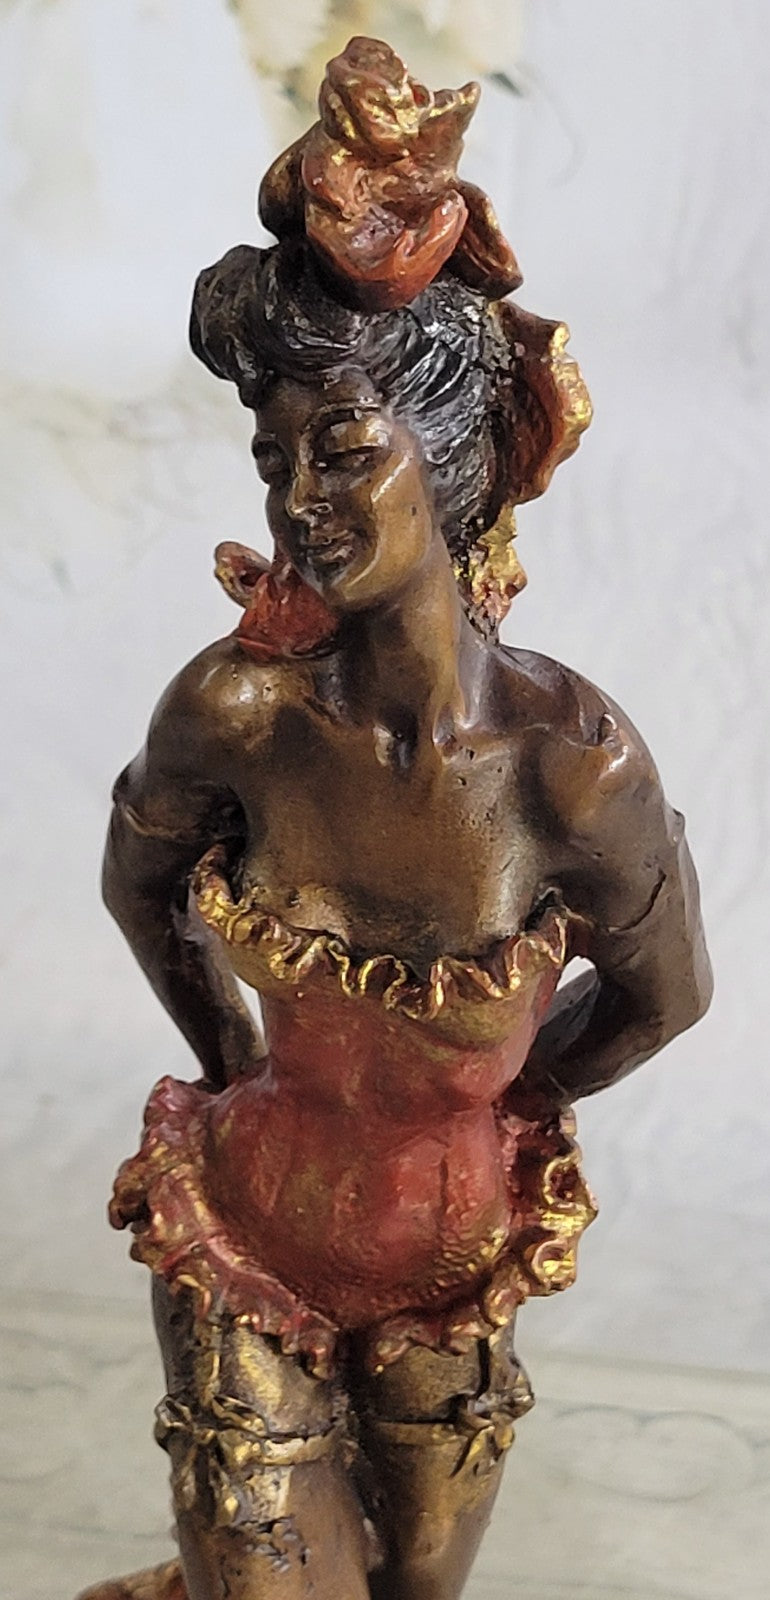 Hot Cast Handcrafted Spanish Dancer Bronze Sculpture Home Office Decor LTD EDT